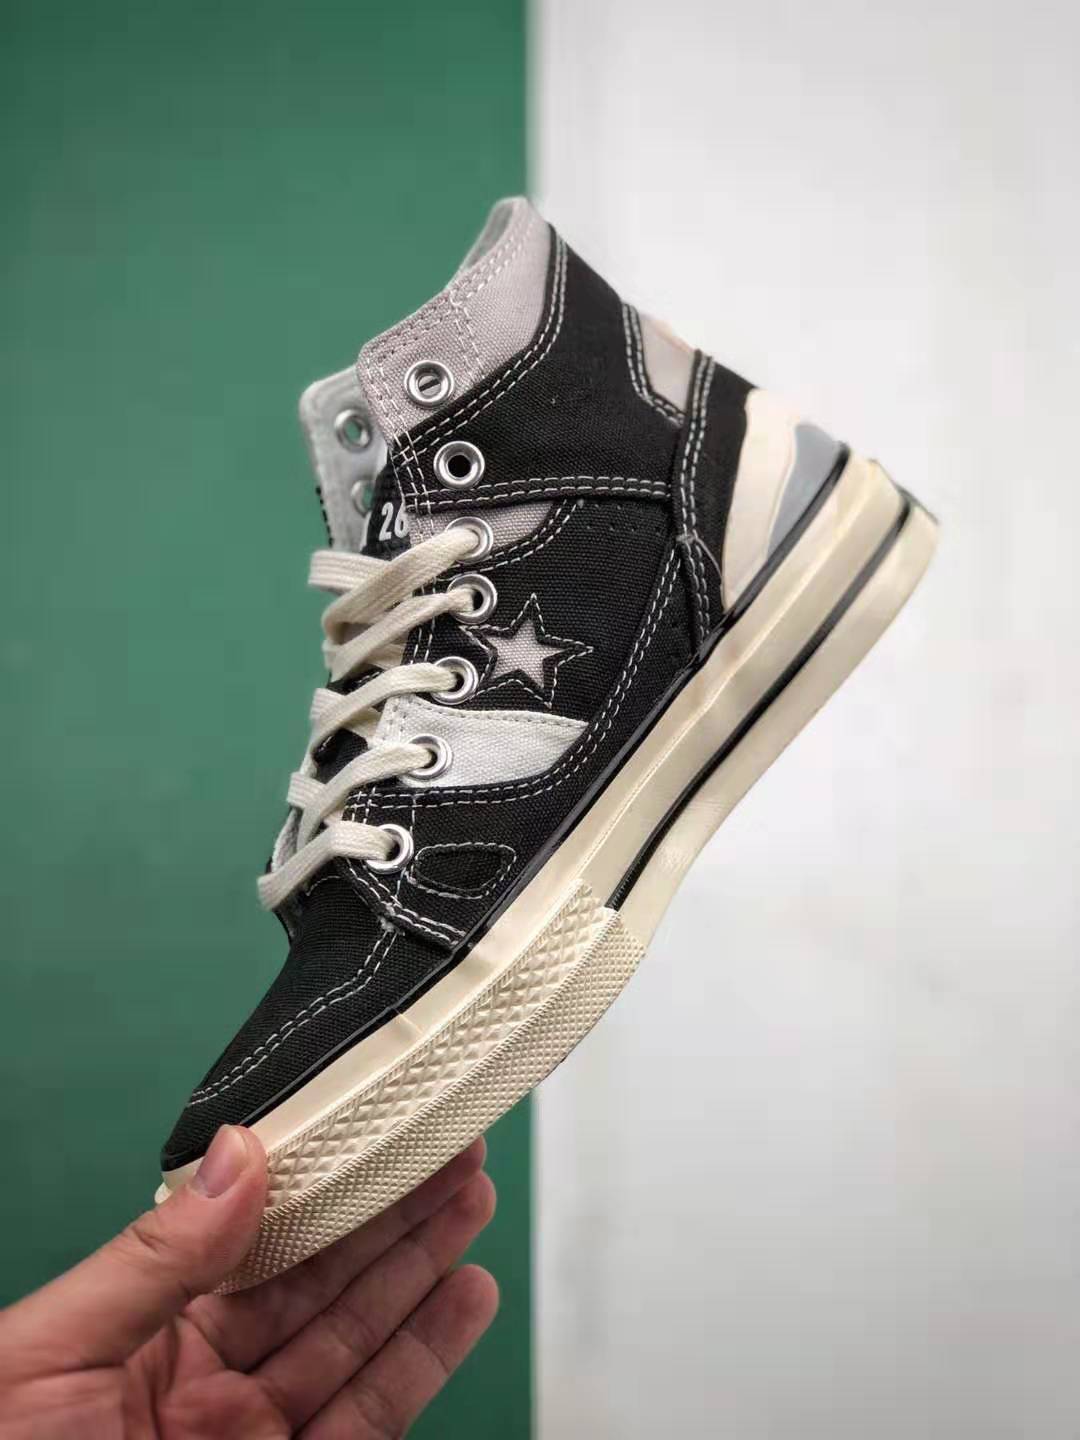 Converse Chuck 1970s E260 Hi 166462C - Classic Style for Trendy Sneaker Fans